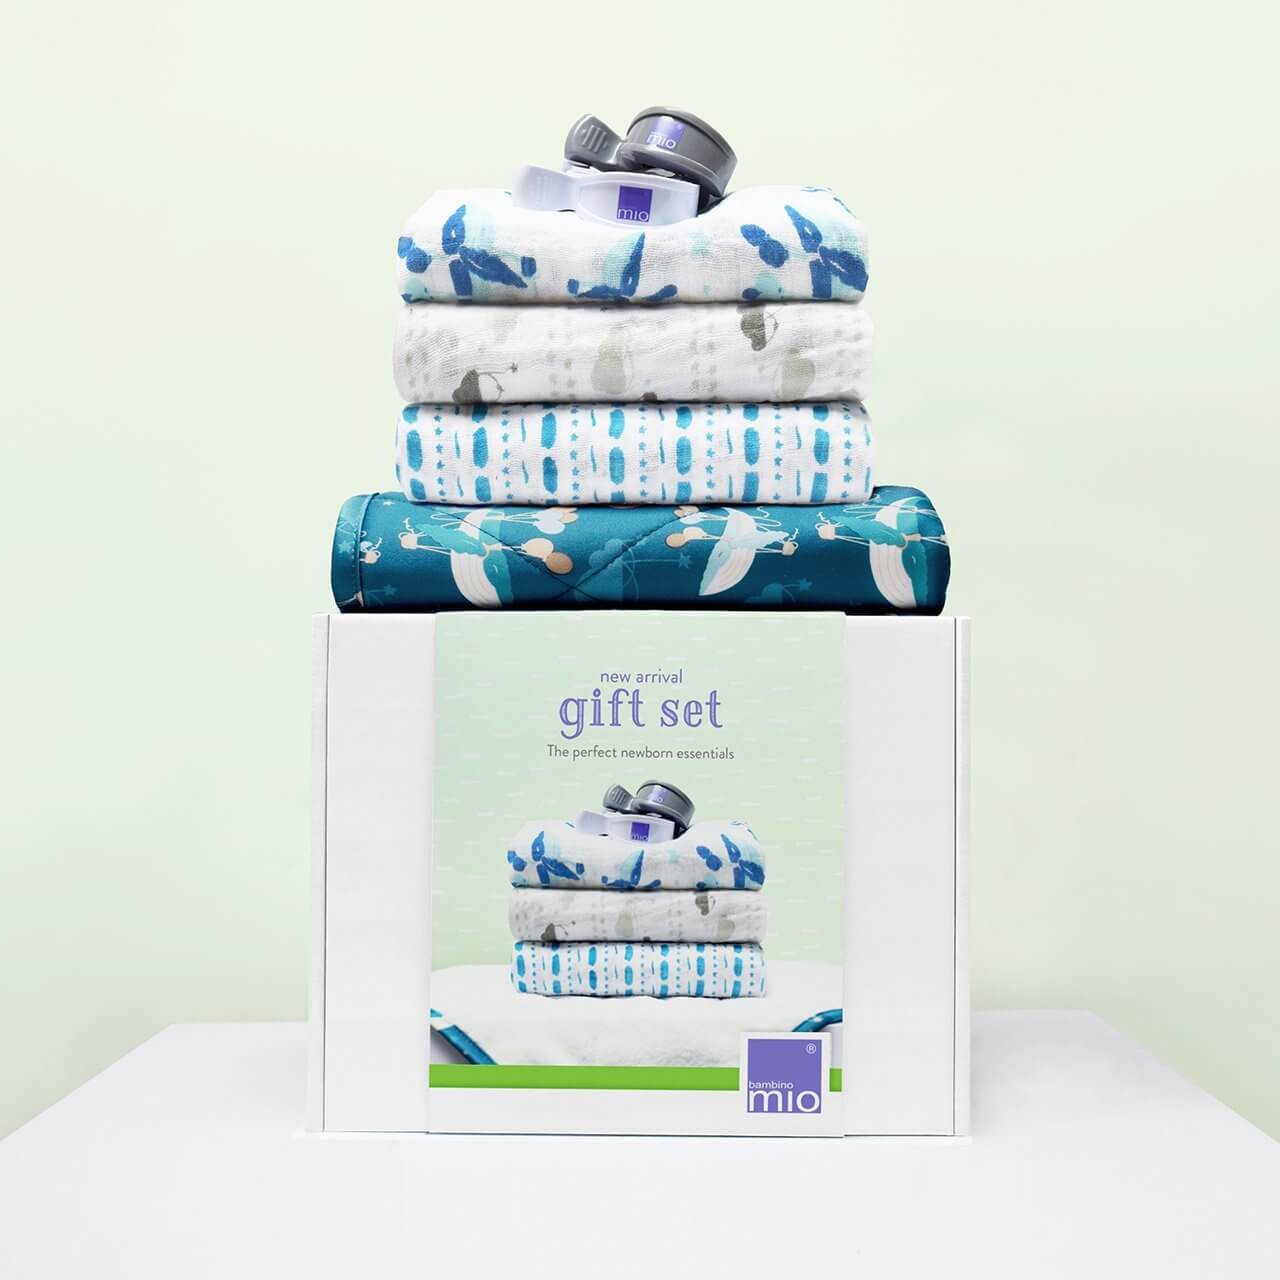 Bambino MioNew Arrival Gift Set - Newborn Essentialschanging change matsEarthlets